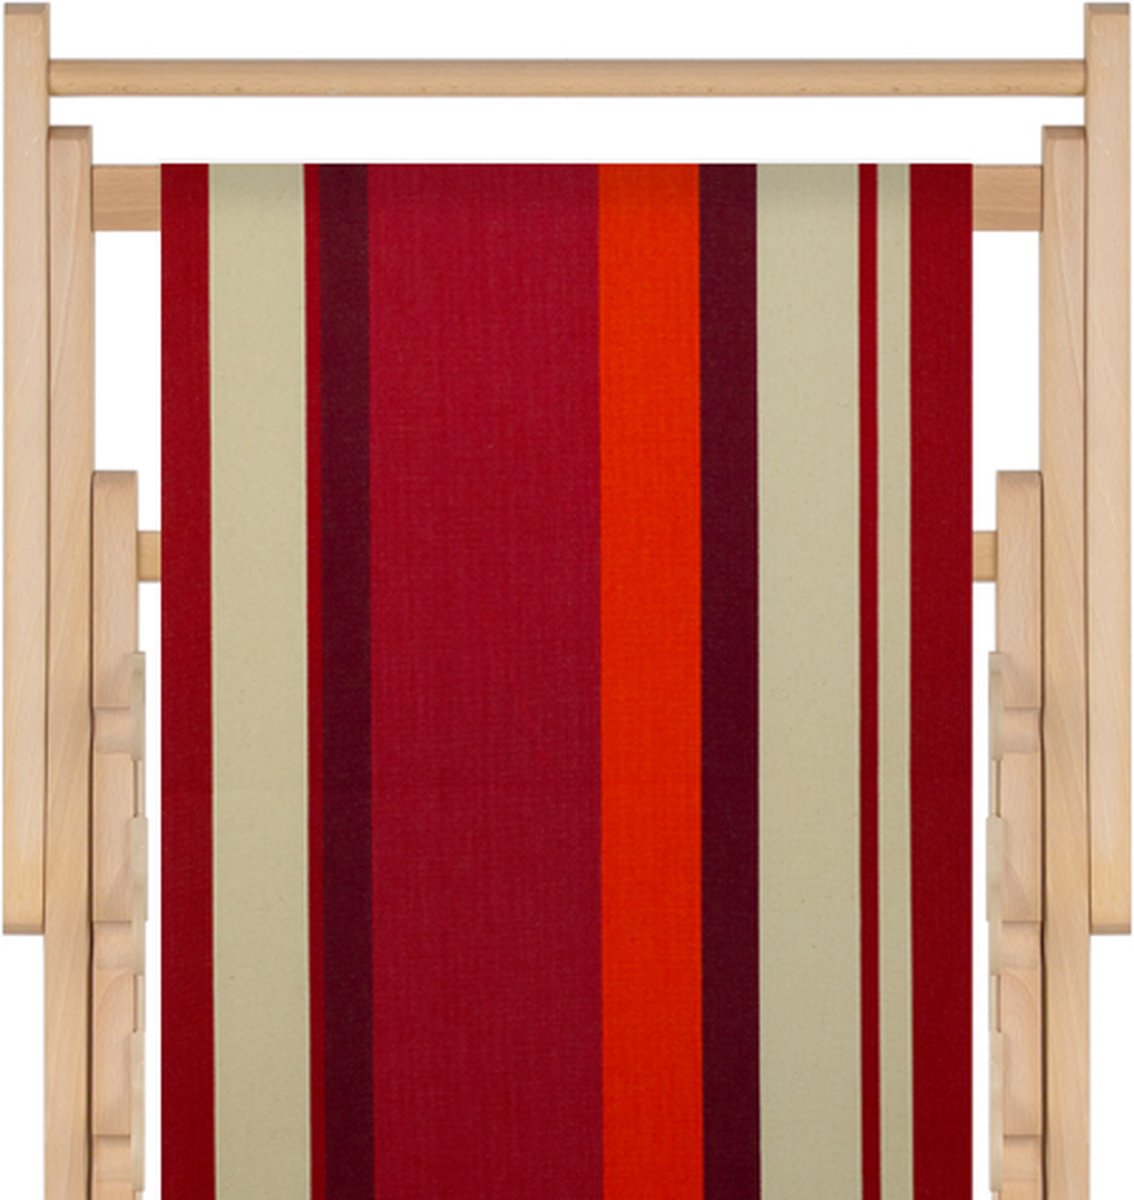 Houten strandstoel met hoogwaardige stof in katoen - massief beukehout - dubbelgeweven katoen - opvouwbaar - verstelbaar in 3 standen - zonder armleuning - afneembare hoes - multicolour - strepenpatroon